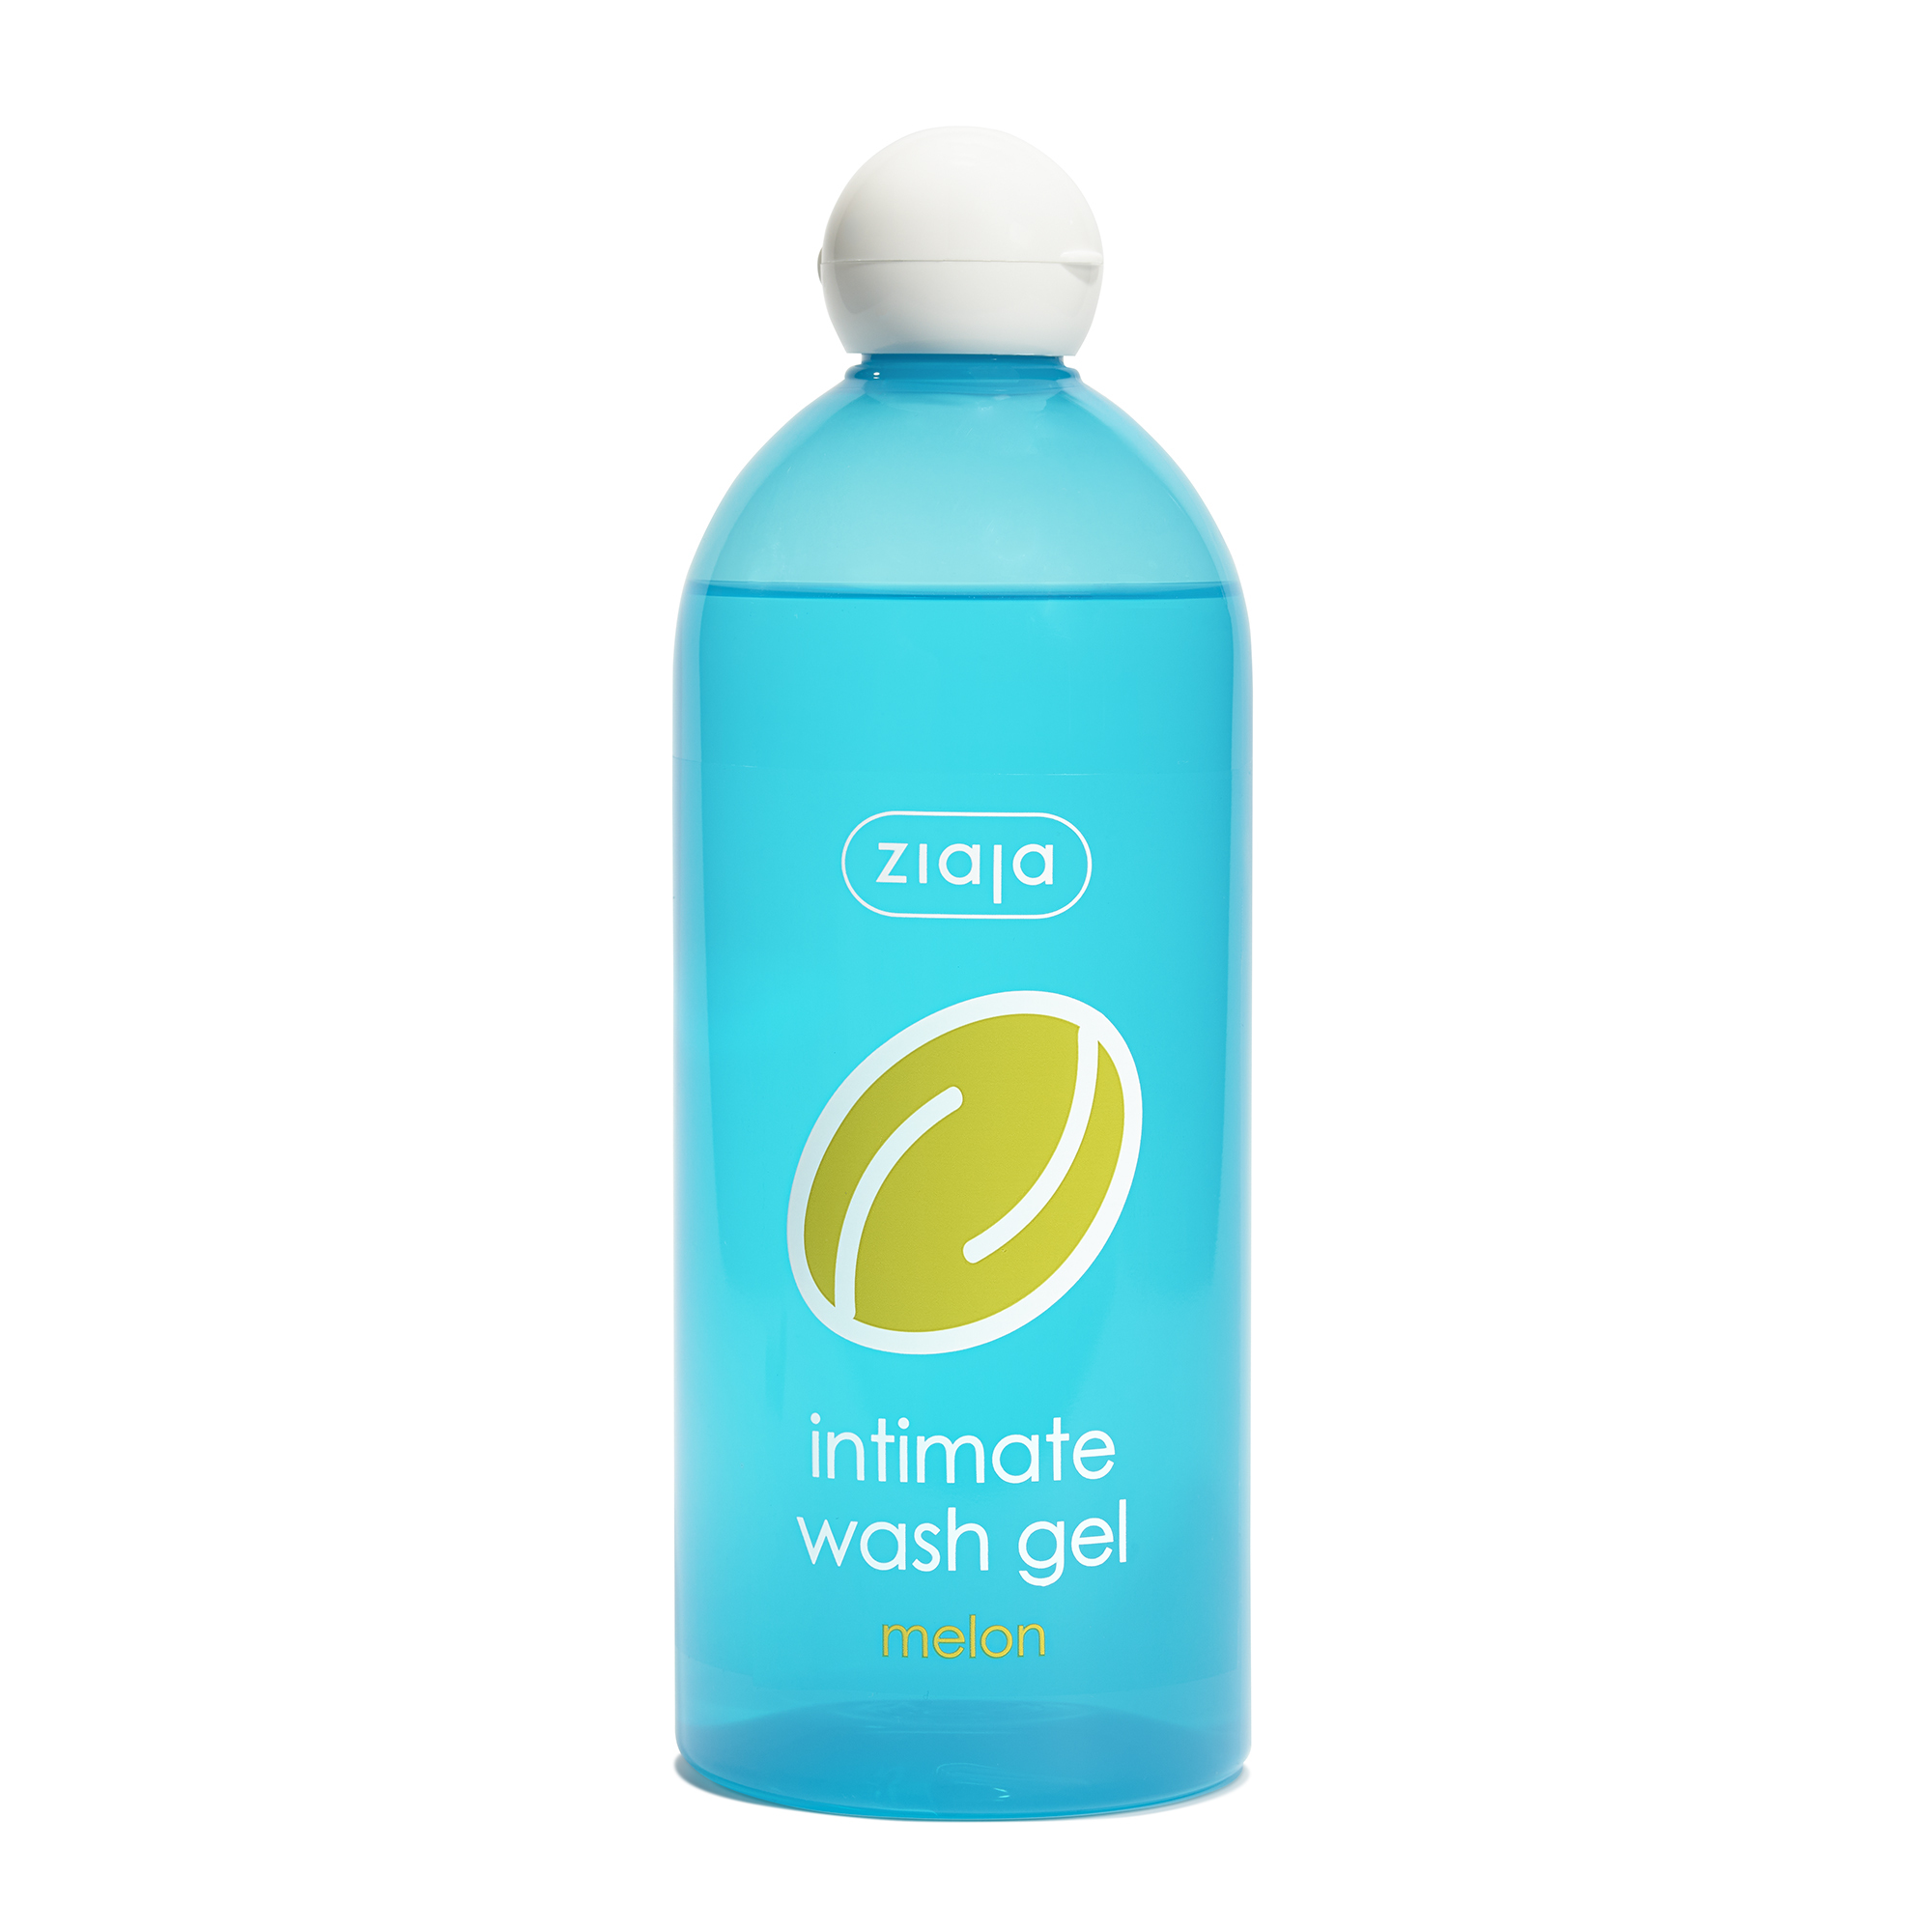 Ziaja Gel pro intimní hygienu Meloun (Intimate Wash Gel) 500 ml